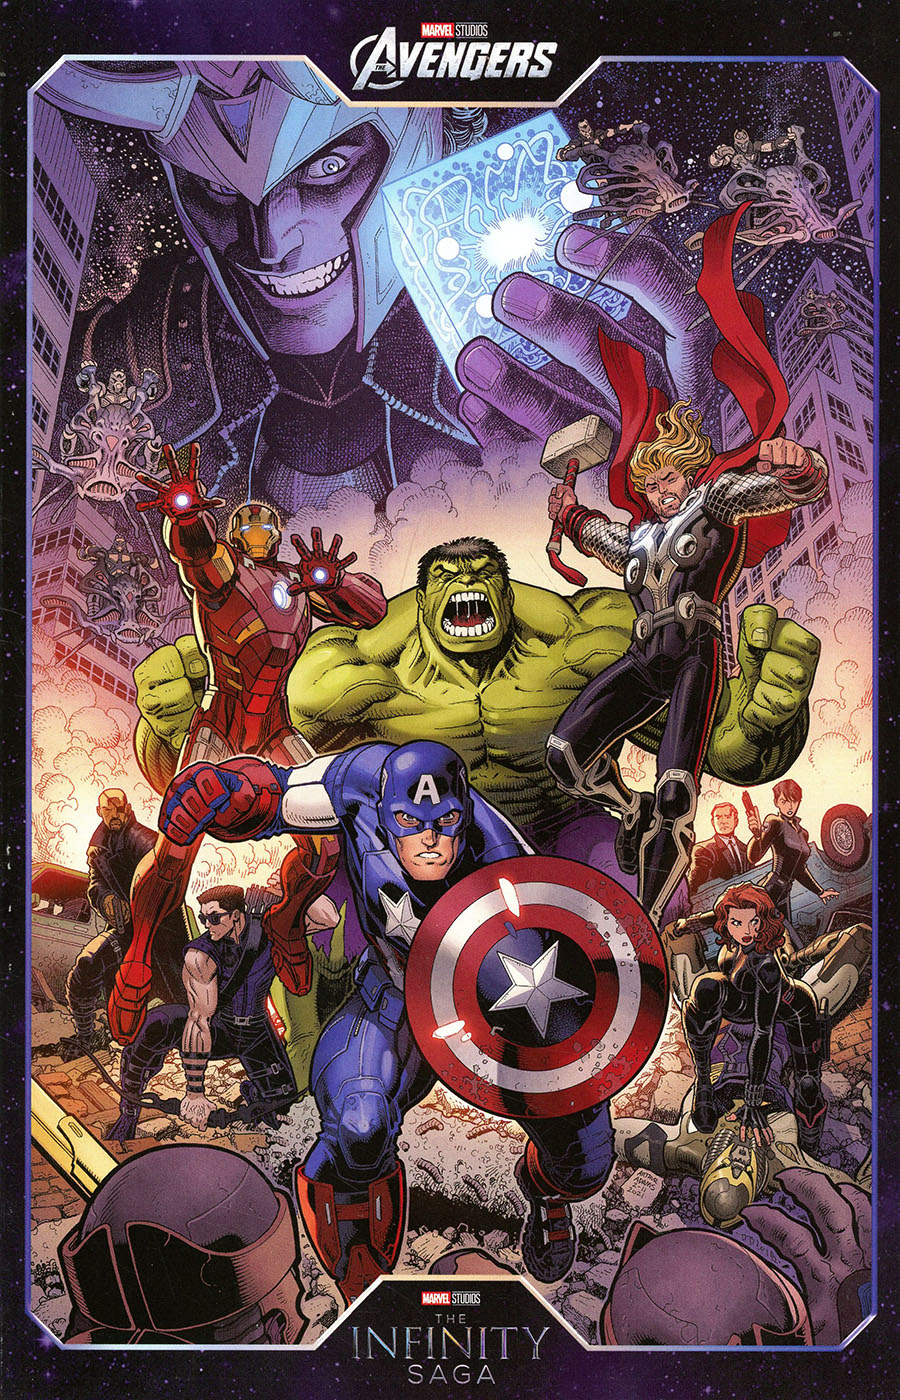 Avengers Vol 7 #50 Cover B Variant Arthur Adams Infinity Saga Phase 1 Cover (#750)